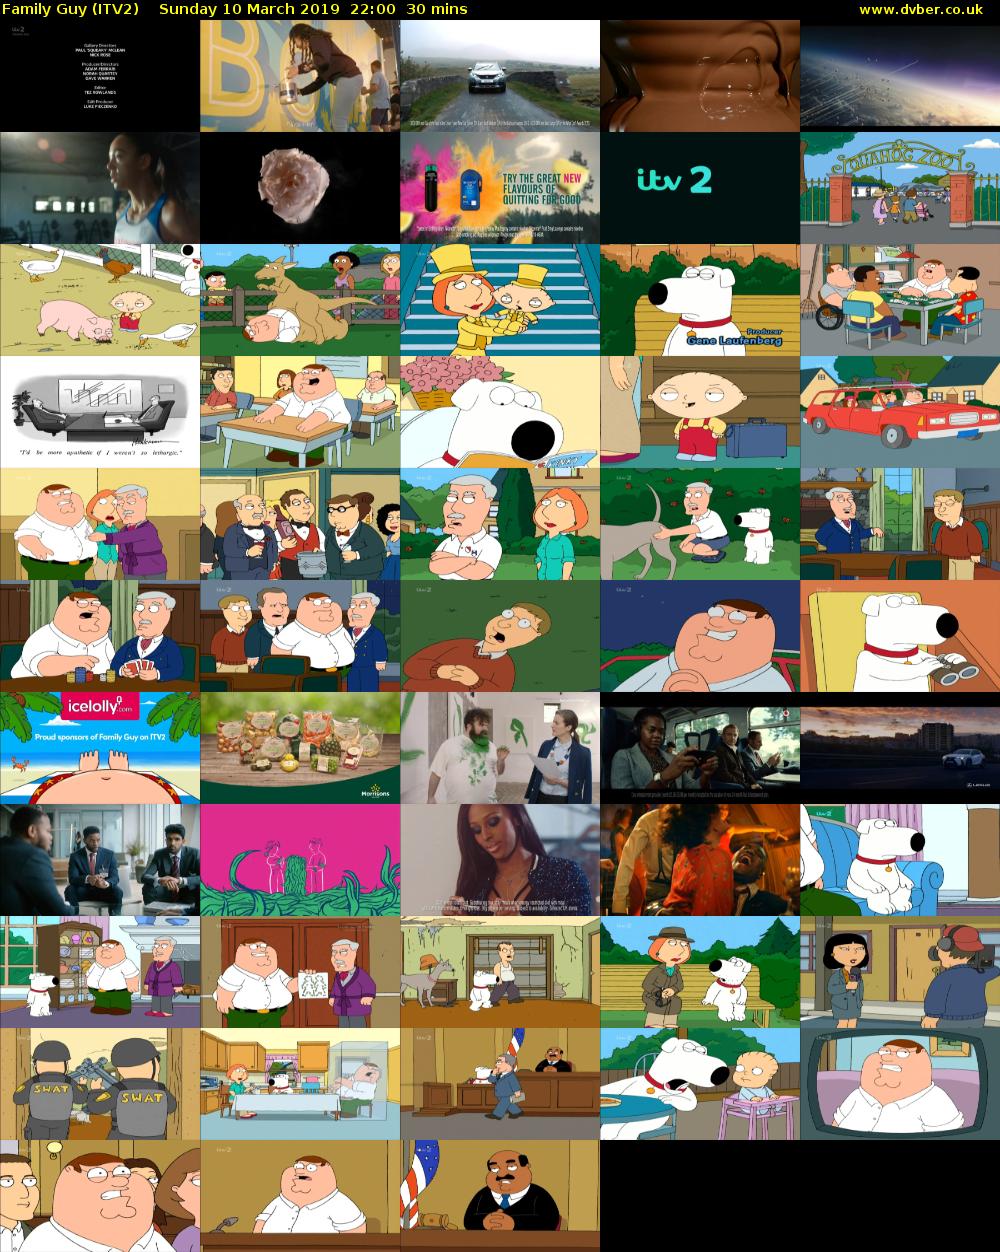 Family Guy (ITV2) Sunday 10 March 2019 22:00 - 22:30